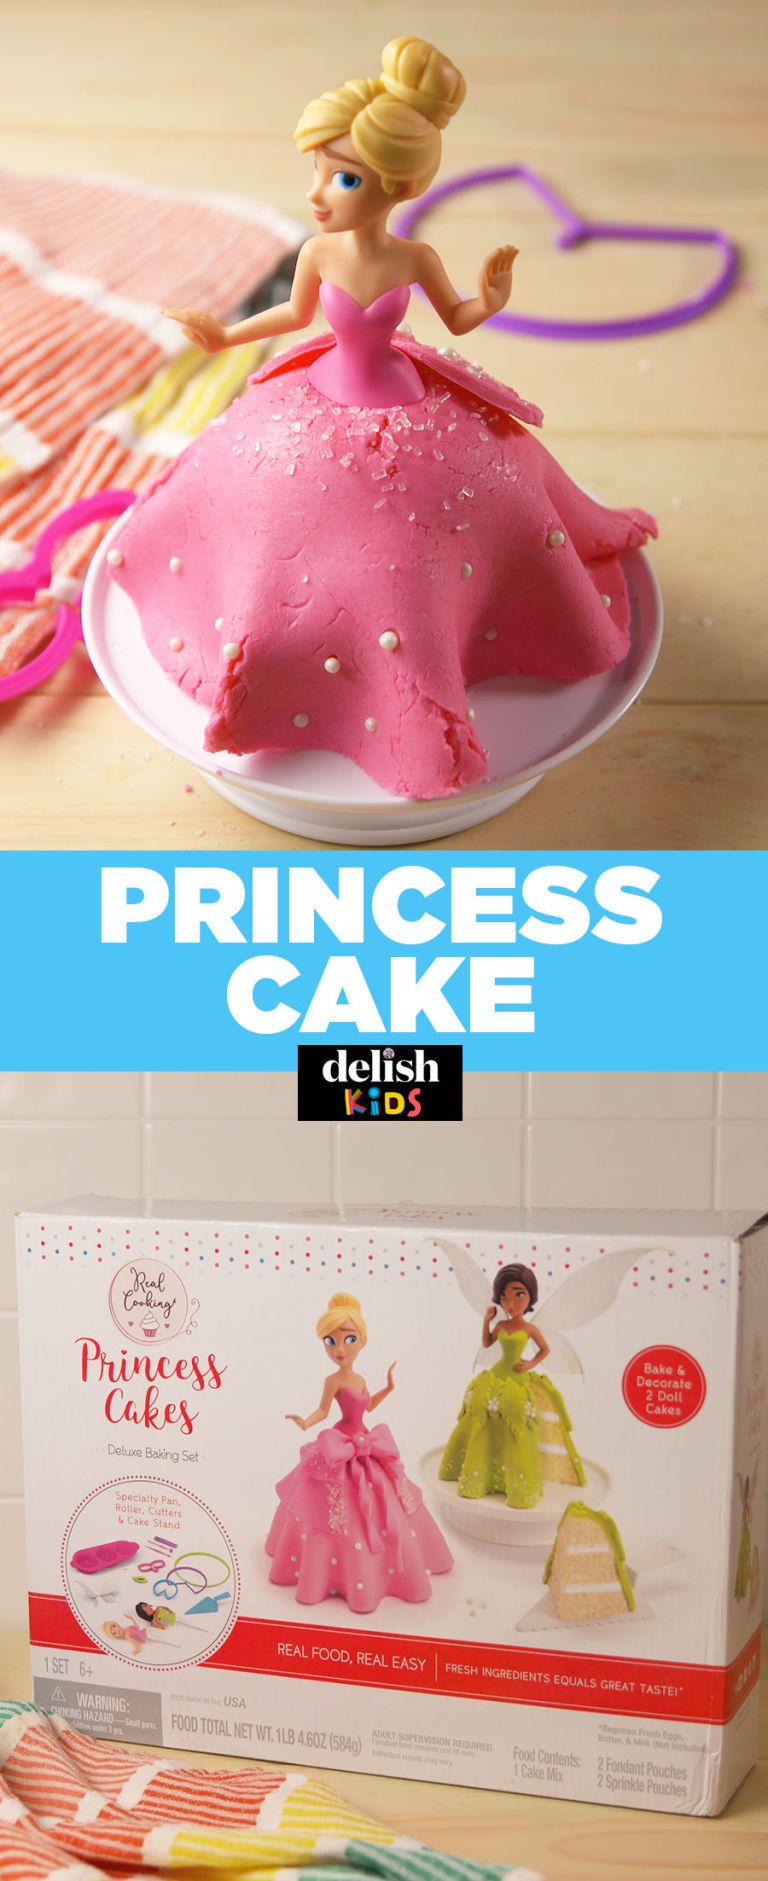 NEW REAL COOKING KIDS PRINCESS CAKES BAKING 